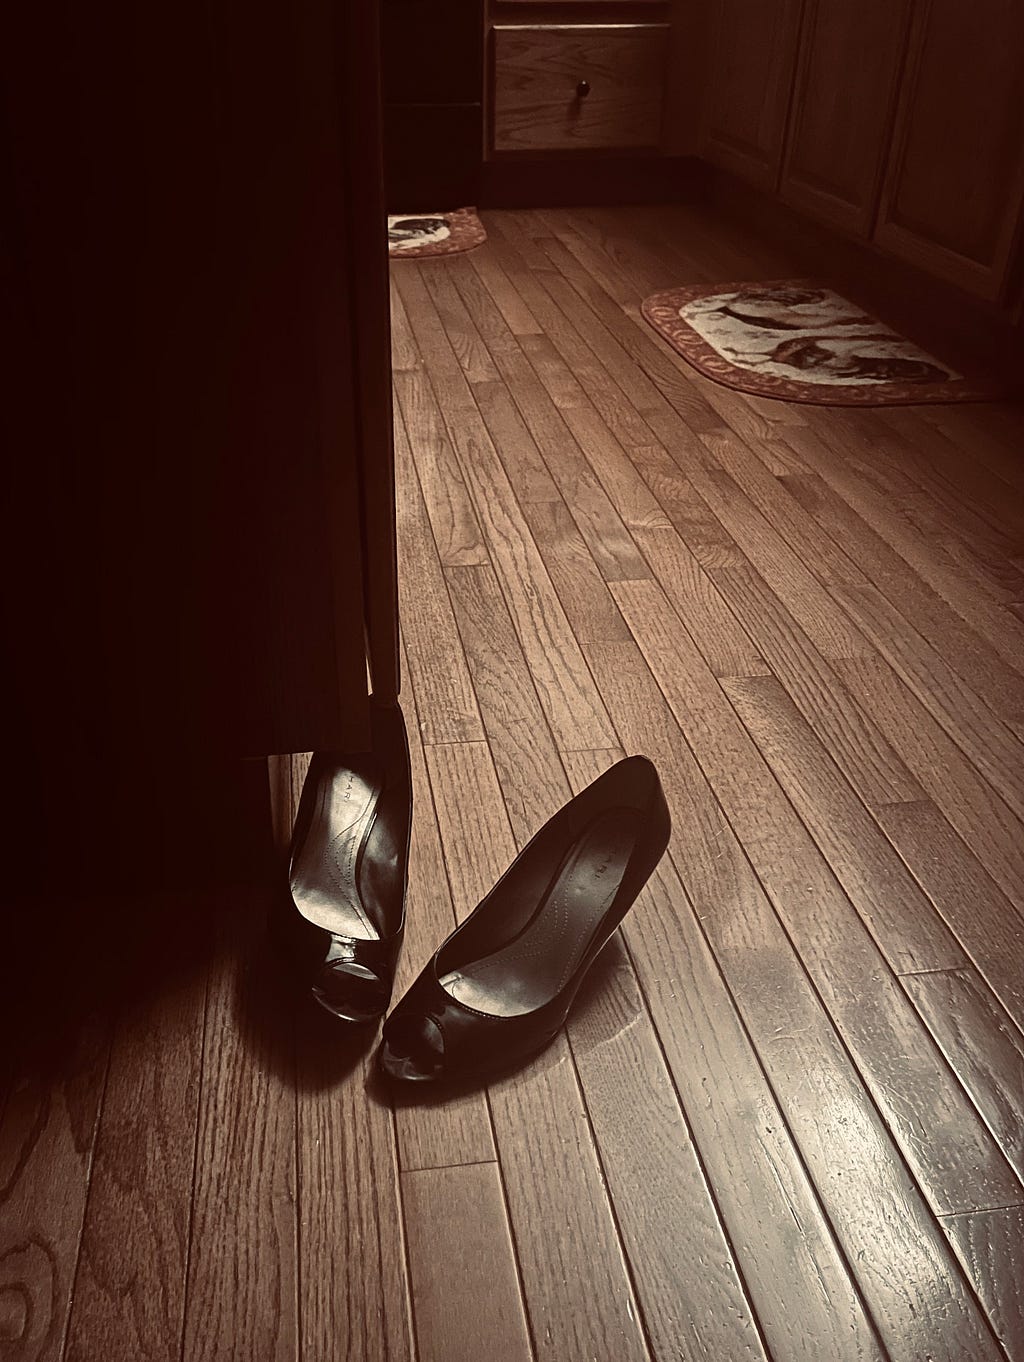 High-heels on a kitchen floor